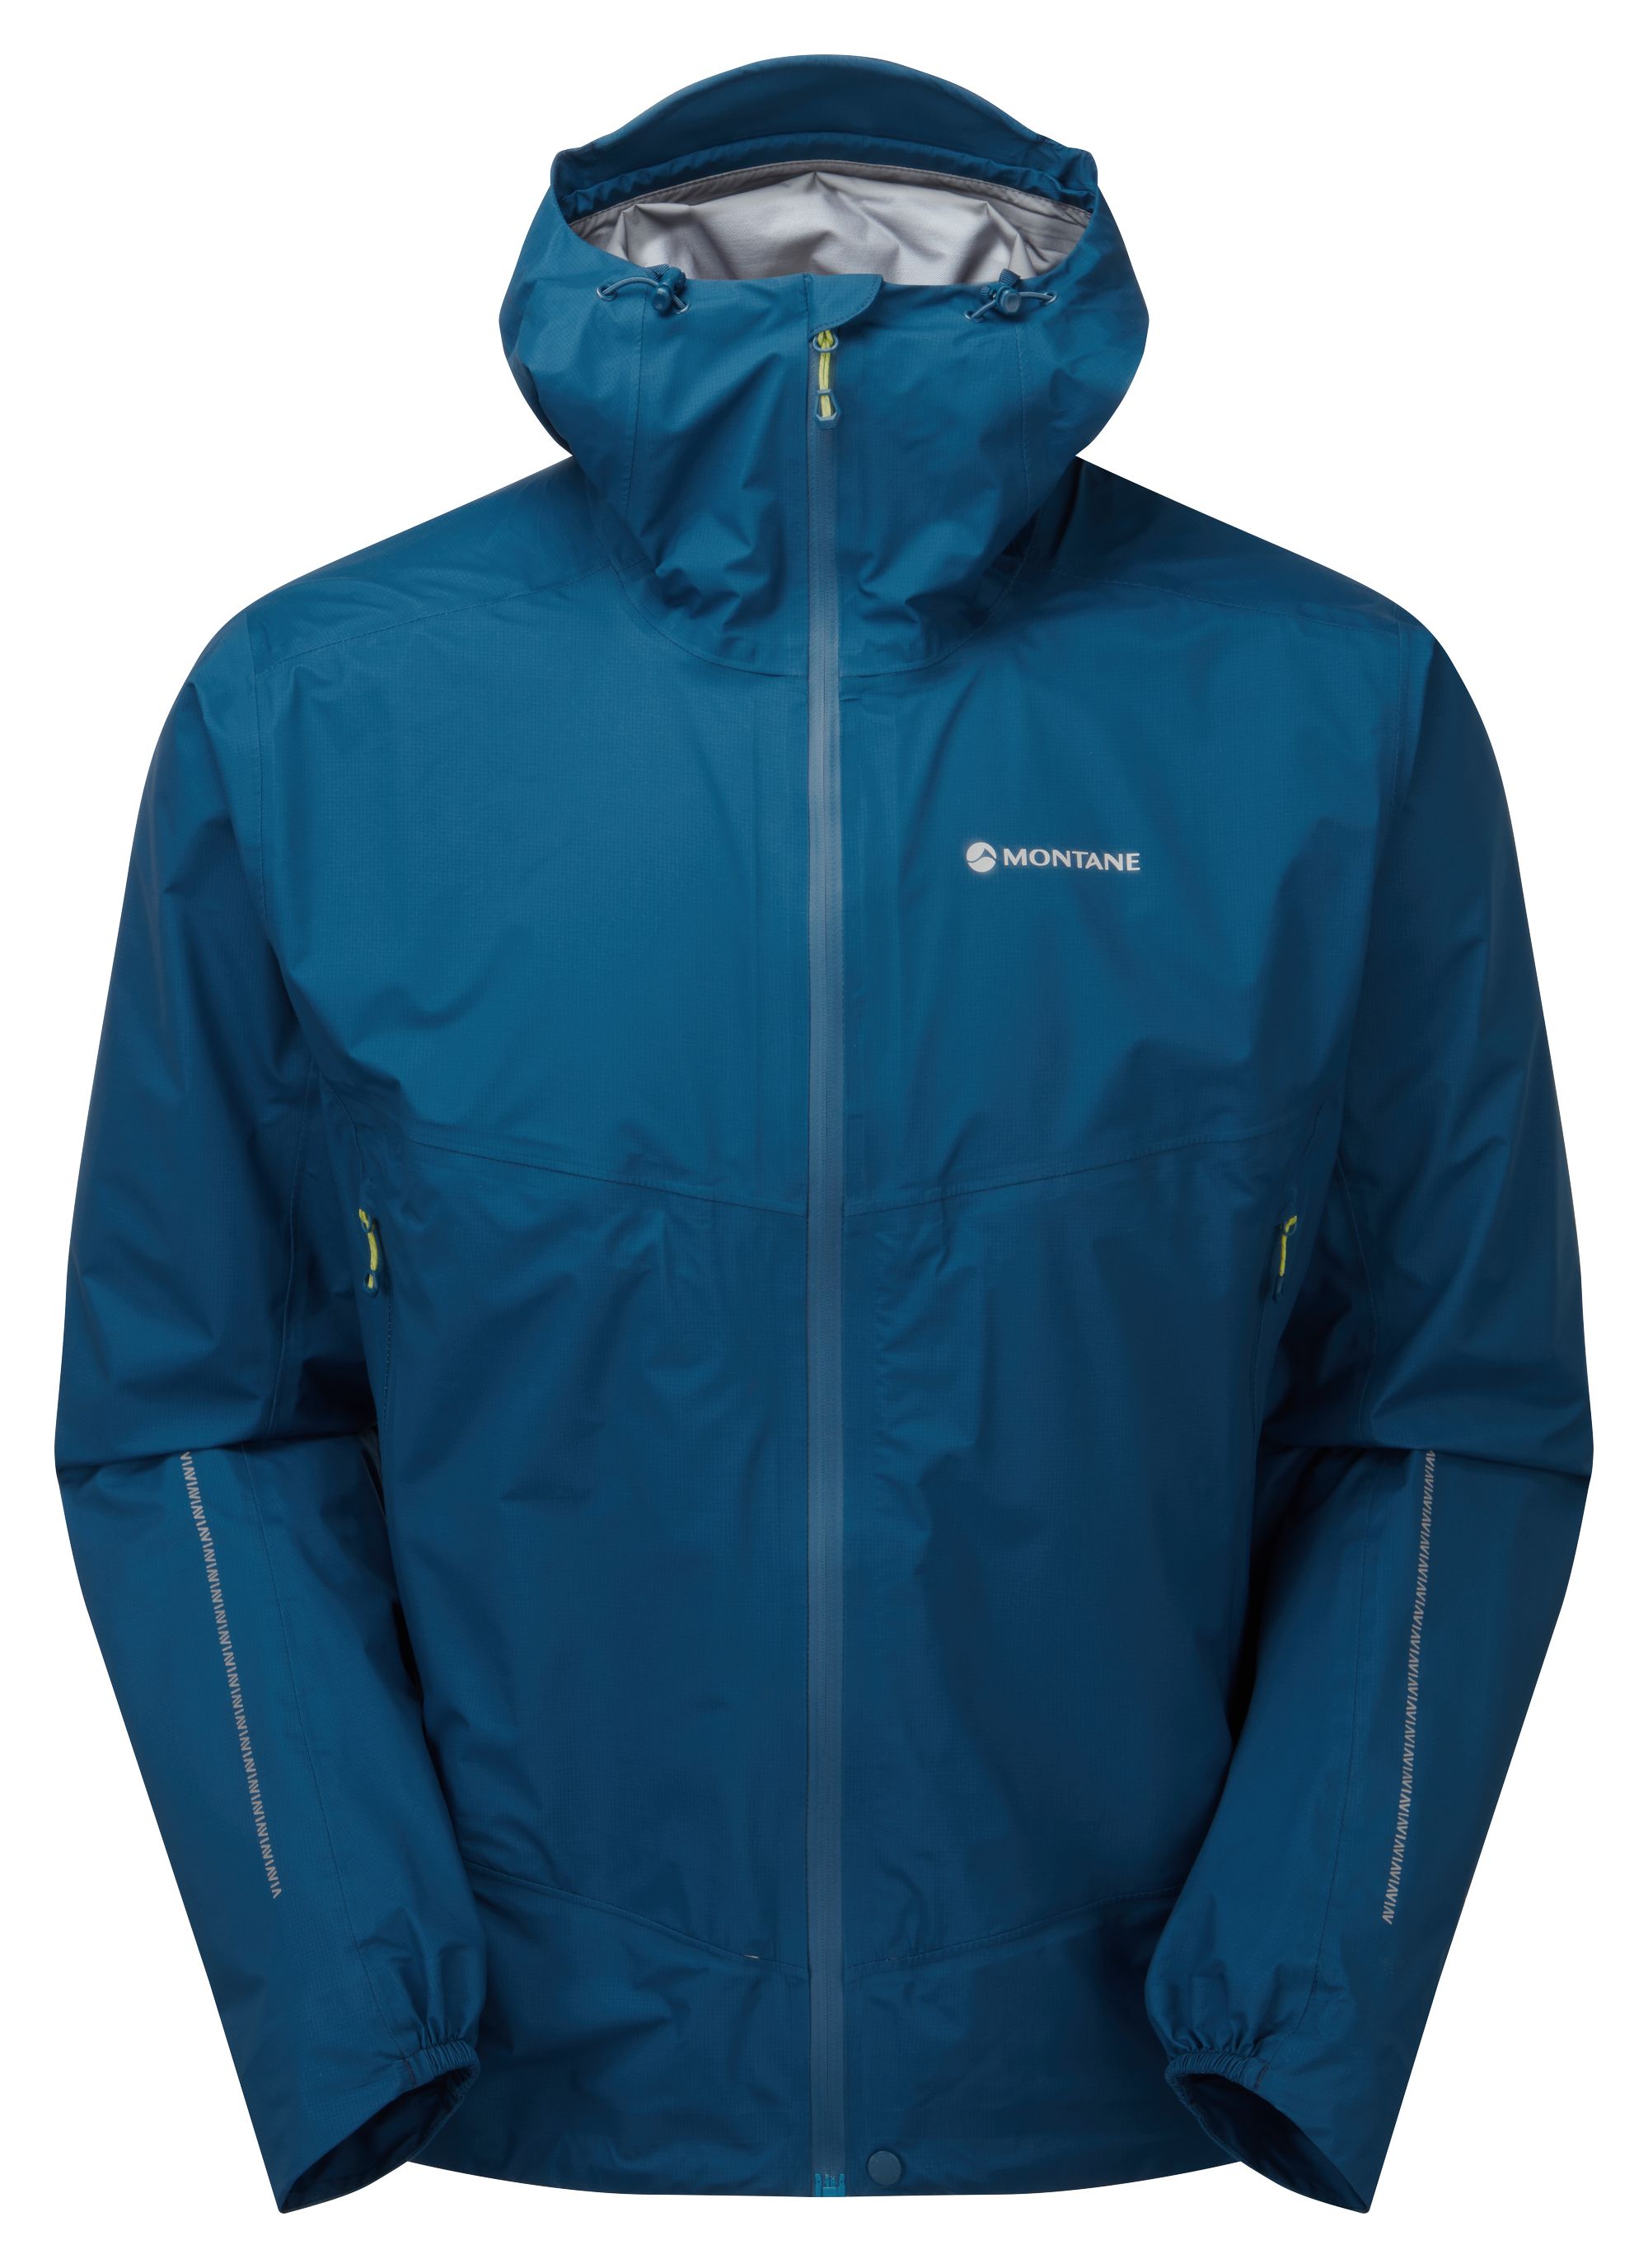 Montane SPINE JACKET-NARWHAL BLUE-S pánská bunda modrá